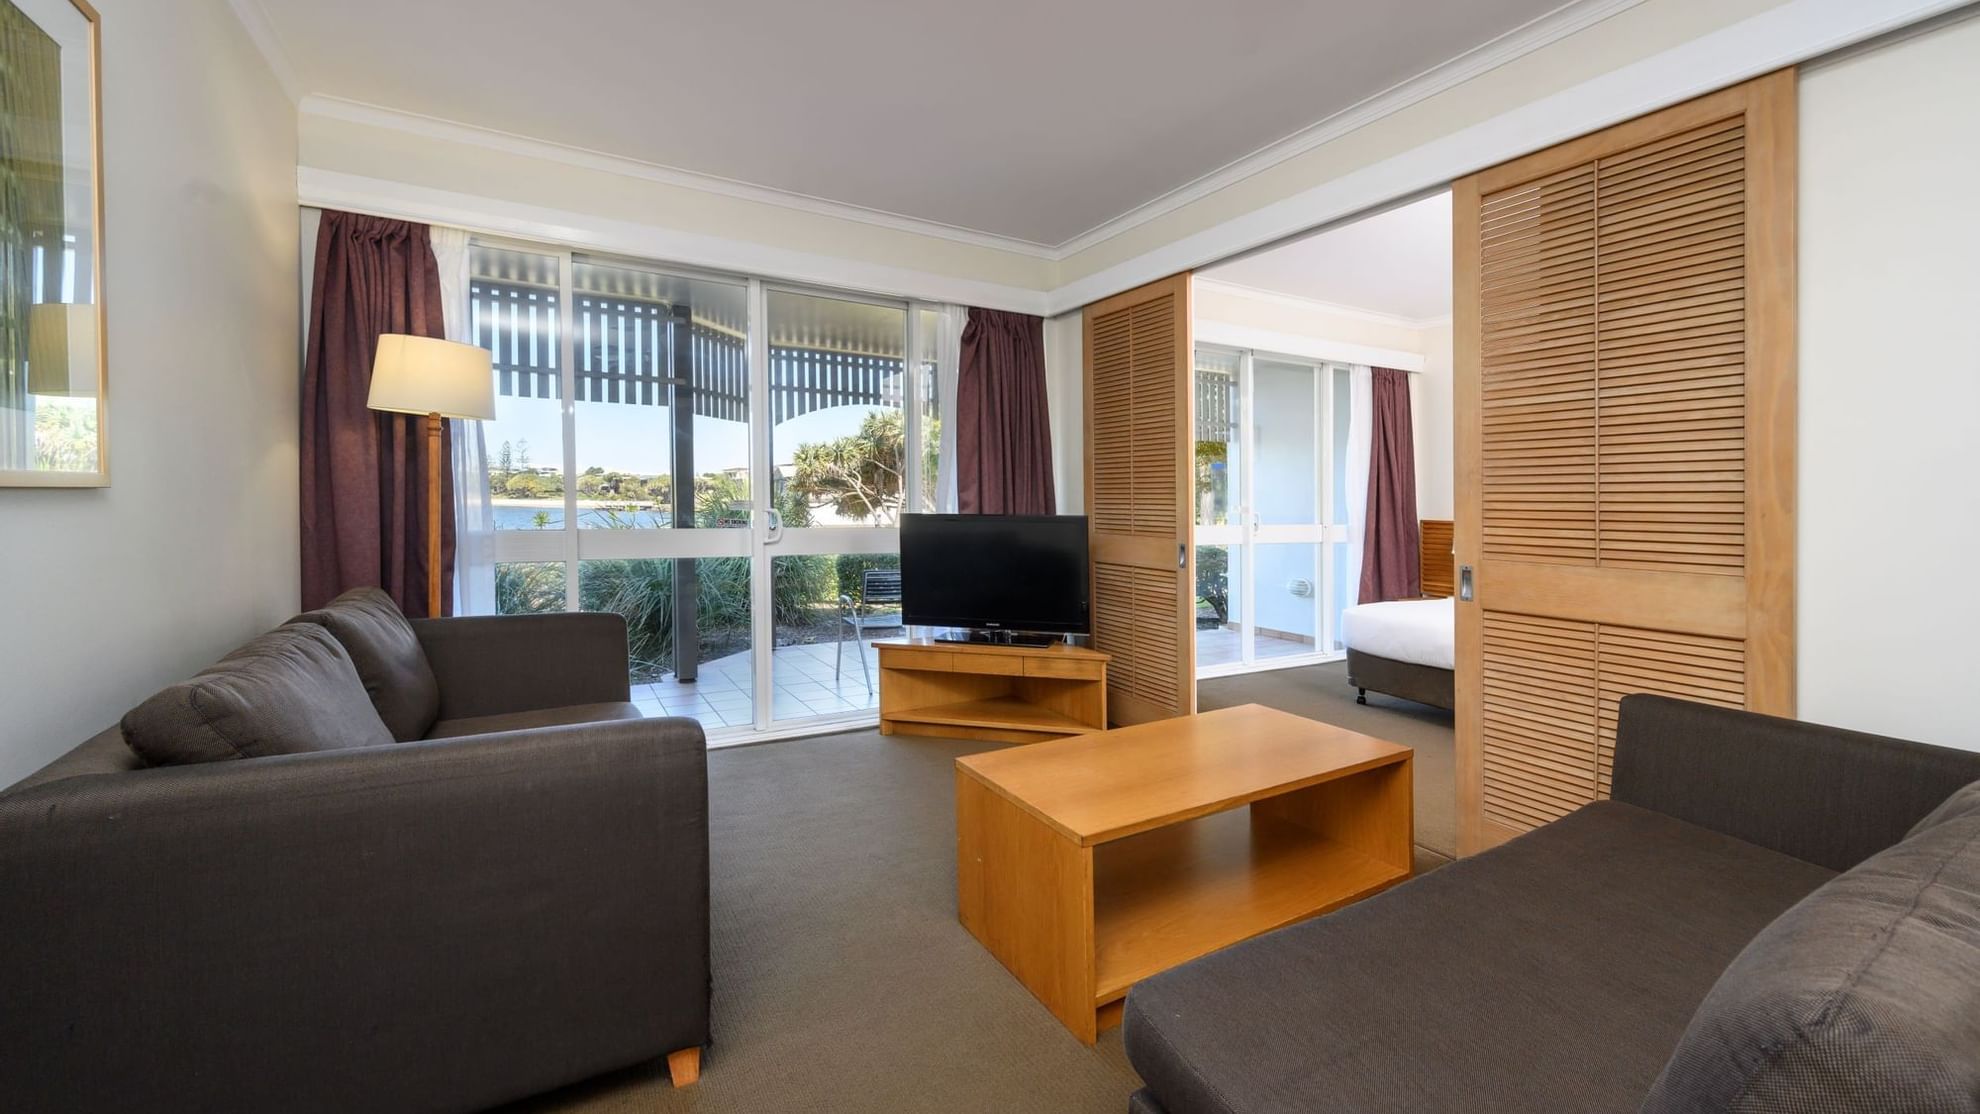 Novotel Sunshine Coast Resort One Bedroom Suite living room with lagoon view